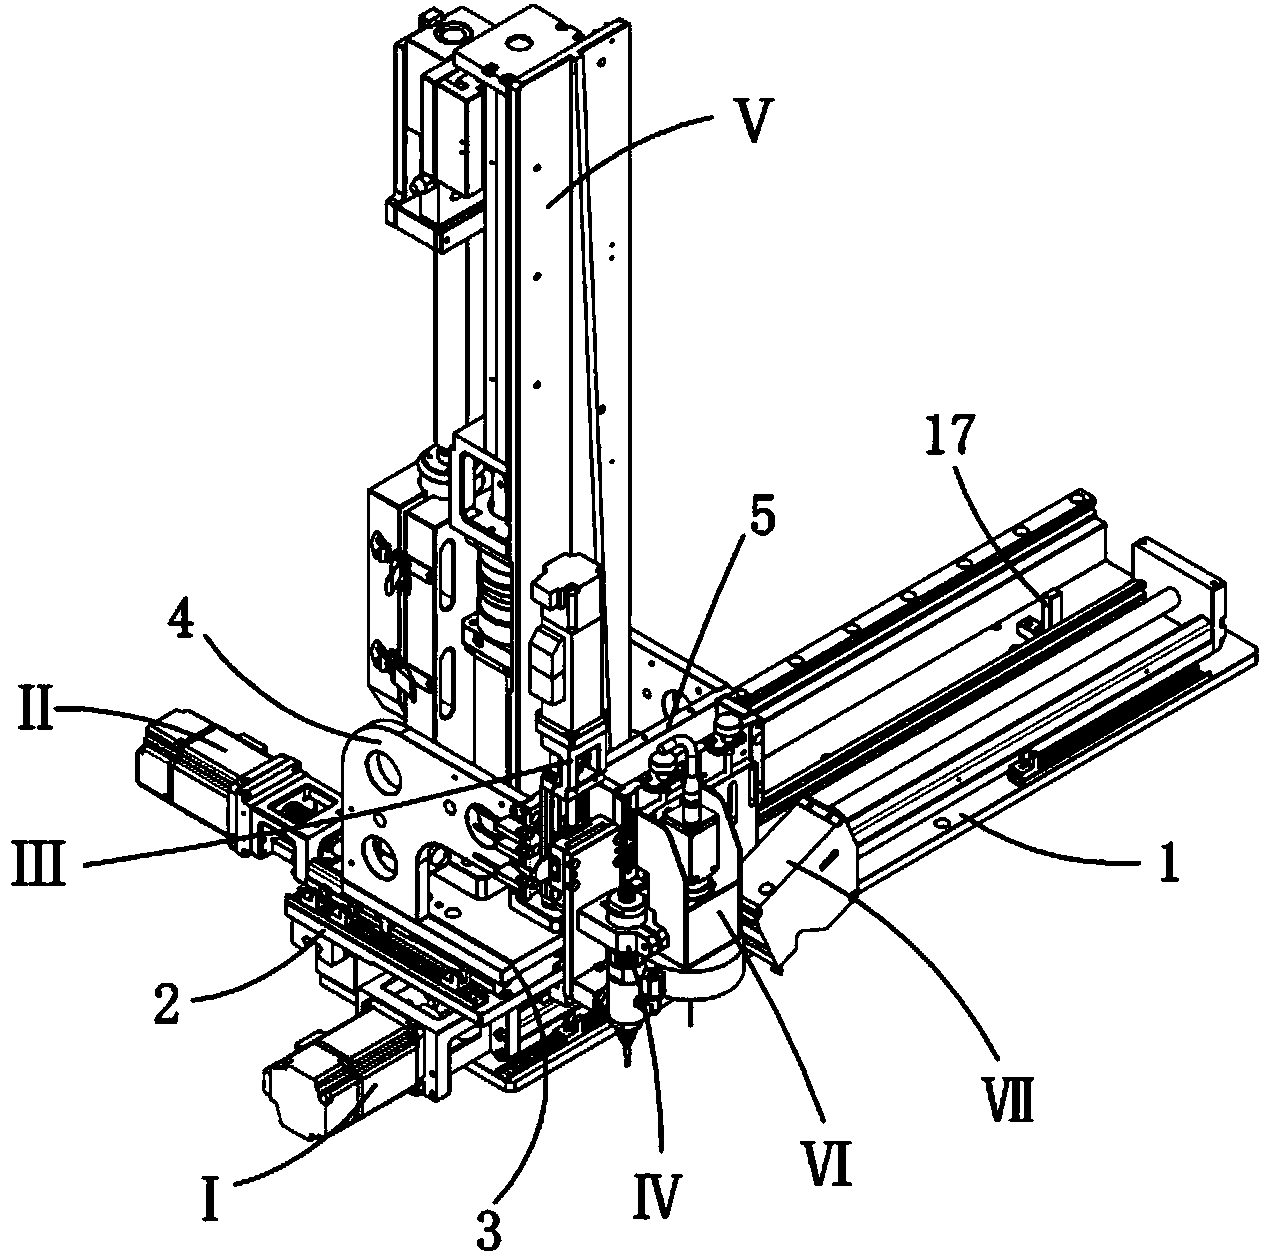 Full-automatic quantitative glue dispensing mechanism